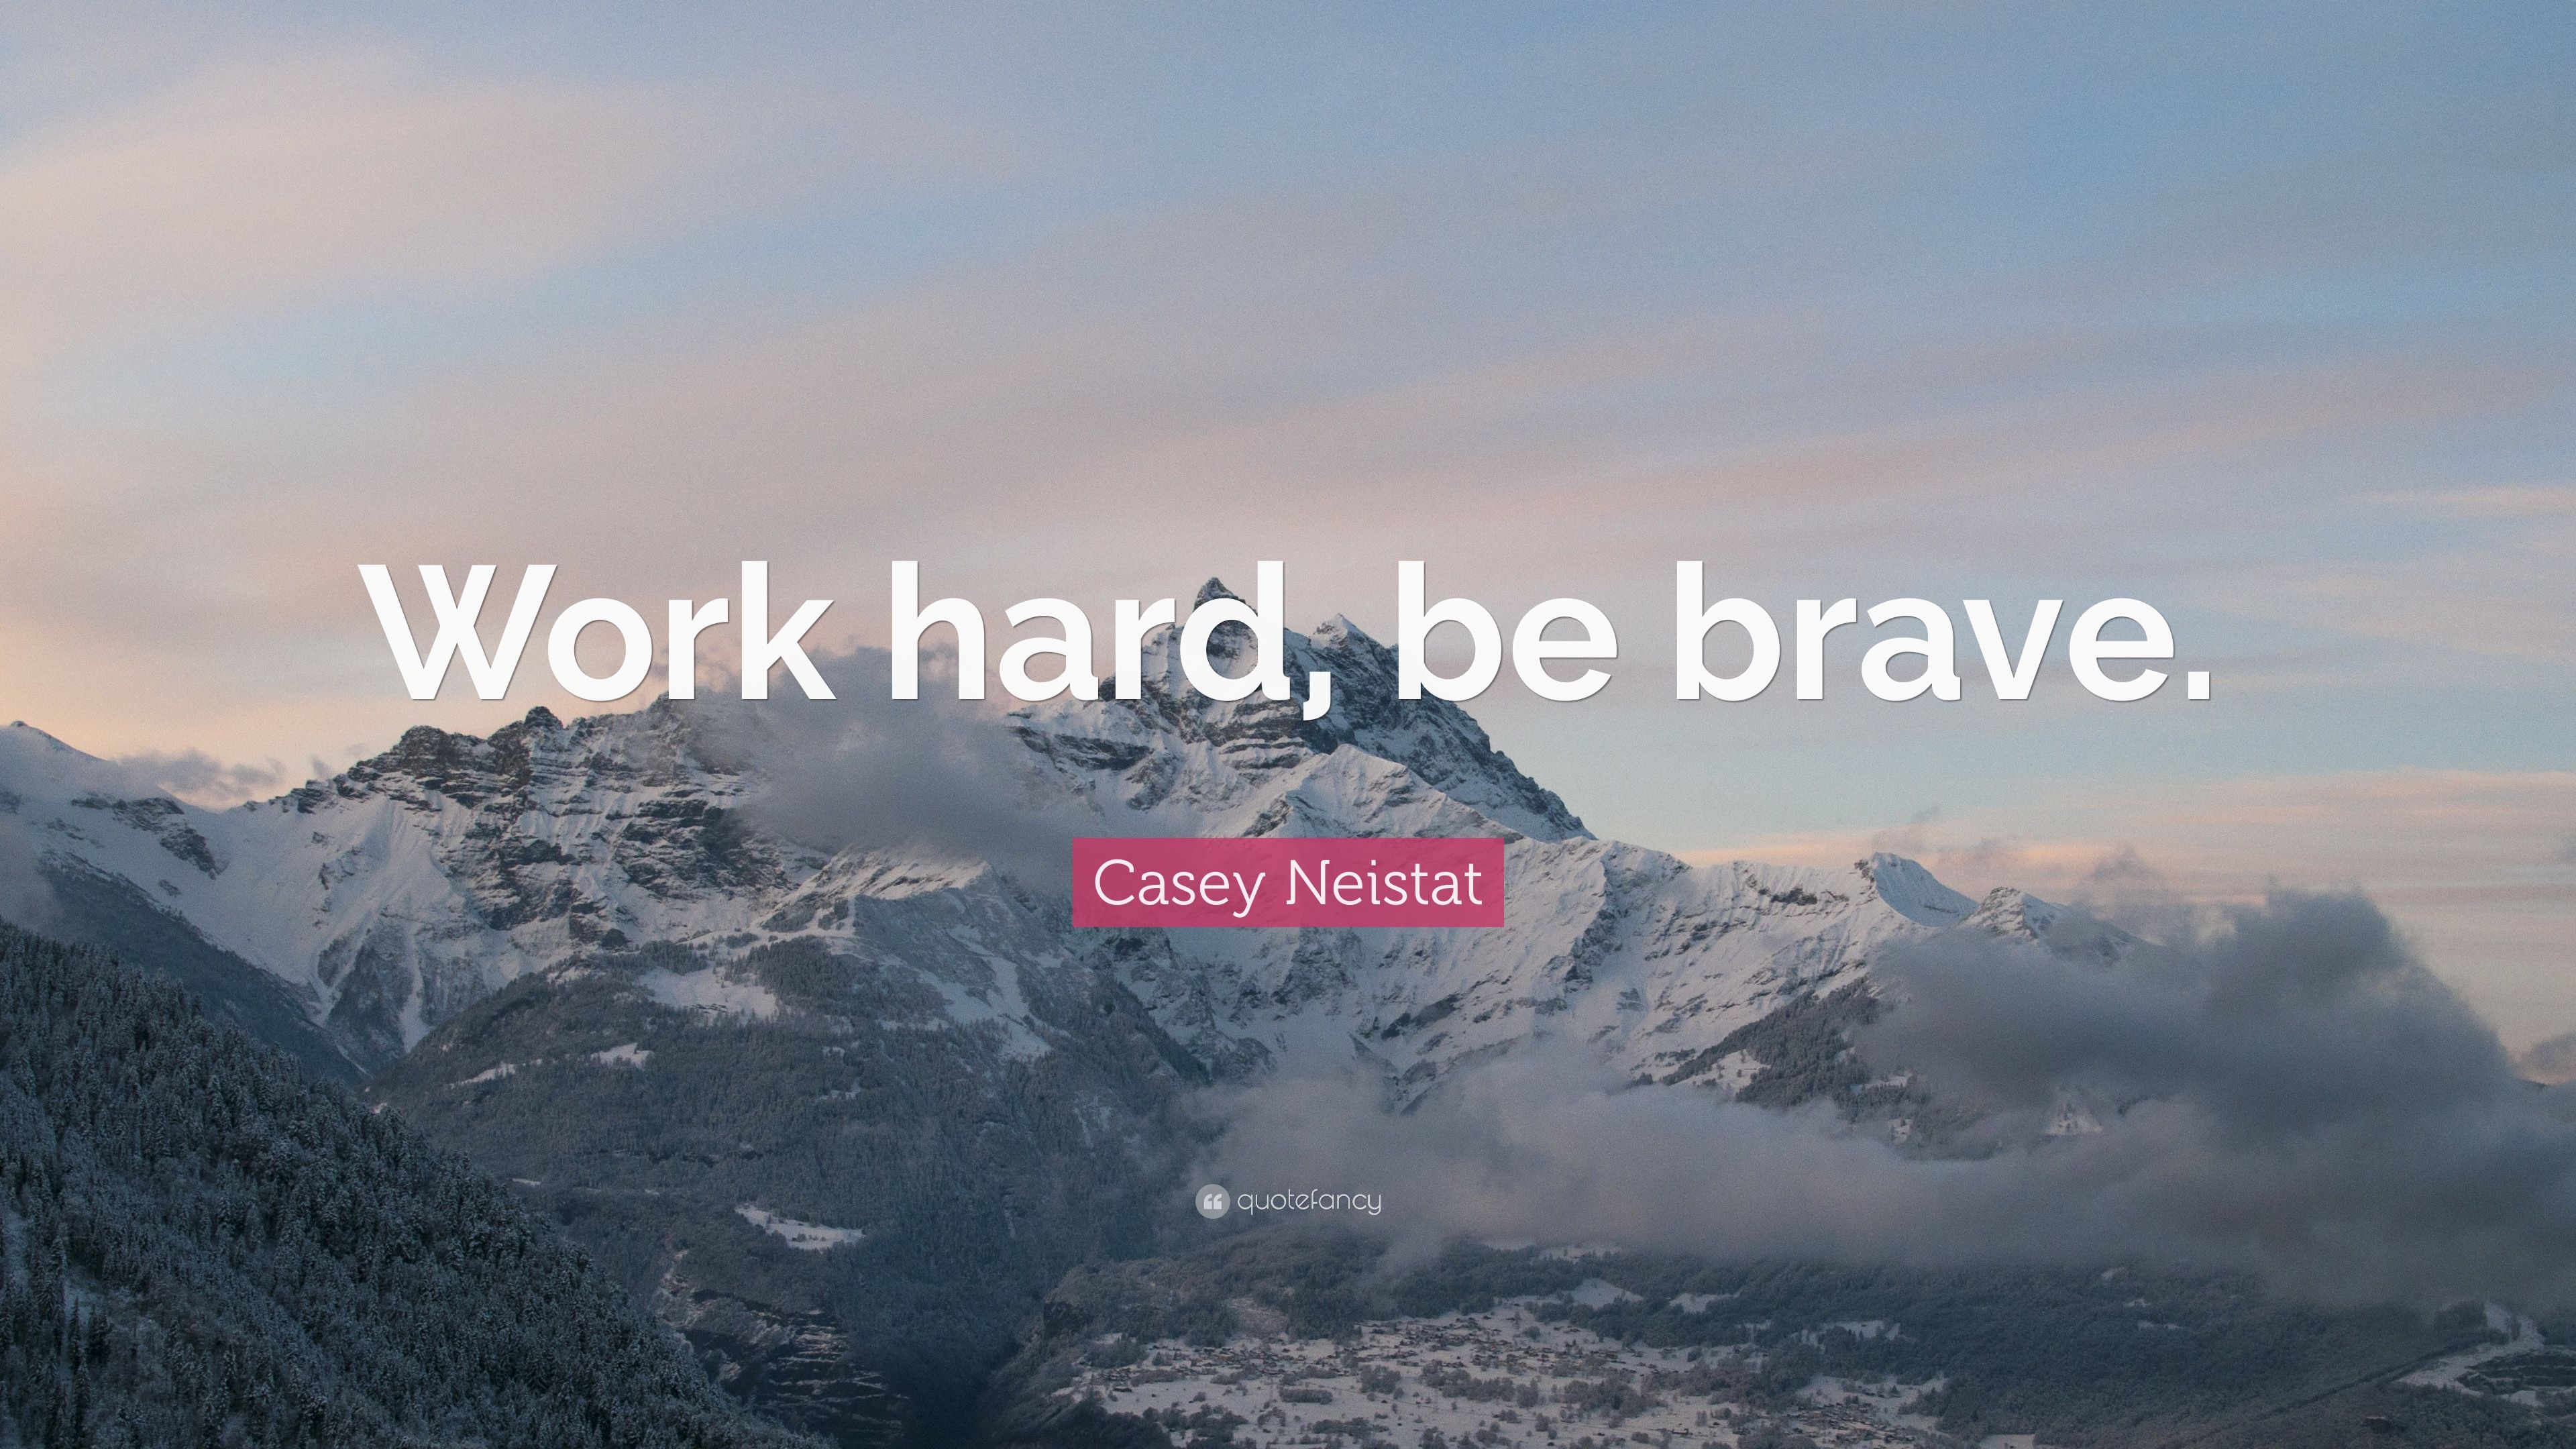 Casey Neistat Quote: “Work hard, be brave.” 24 wallpaper